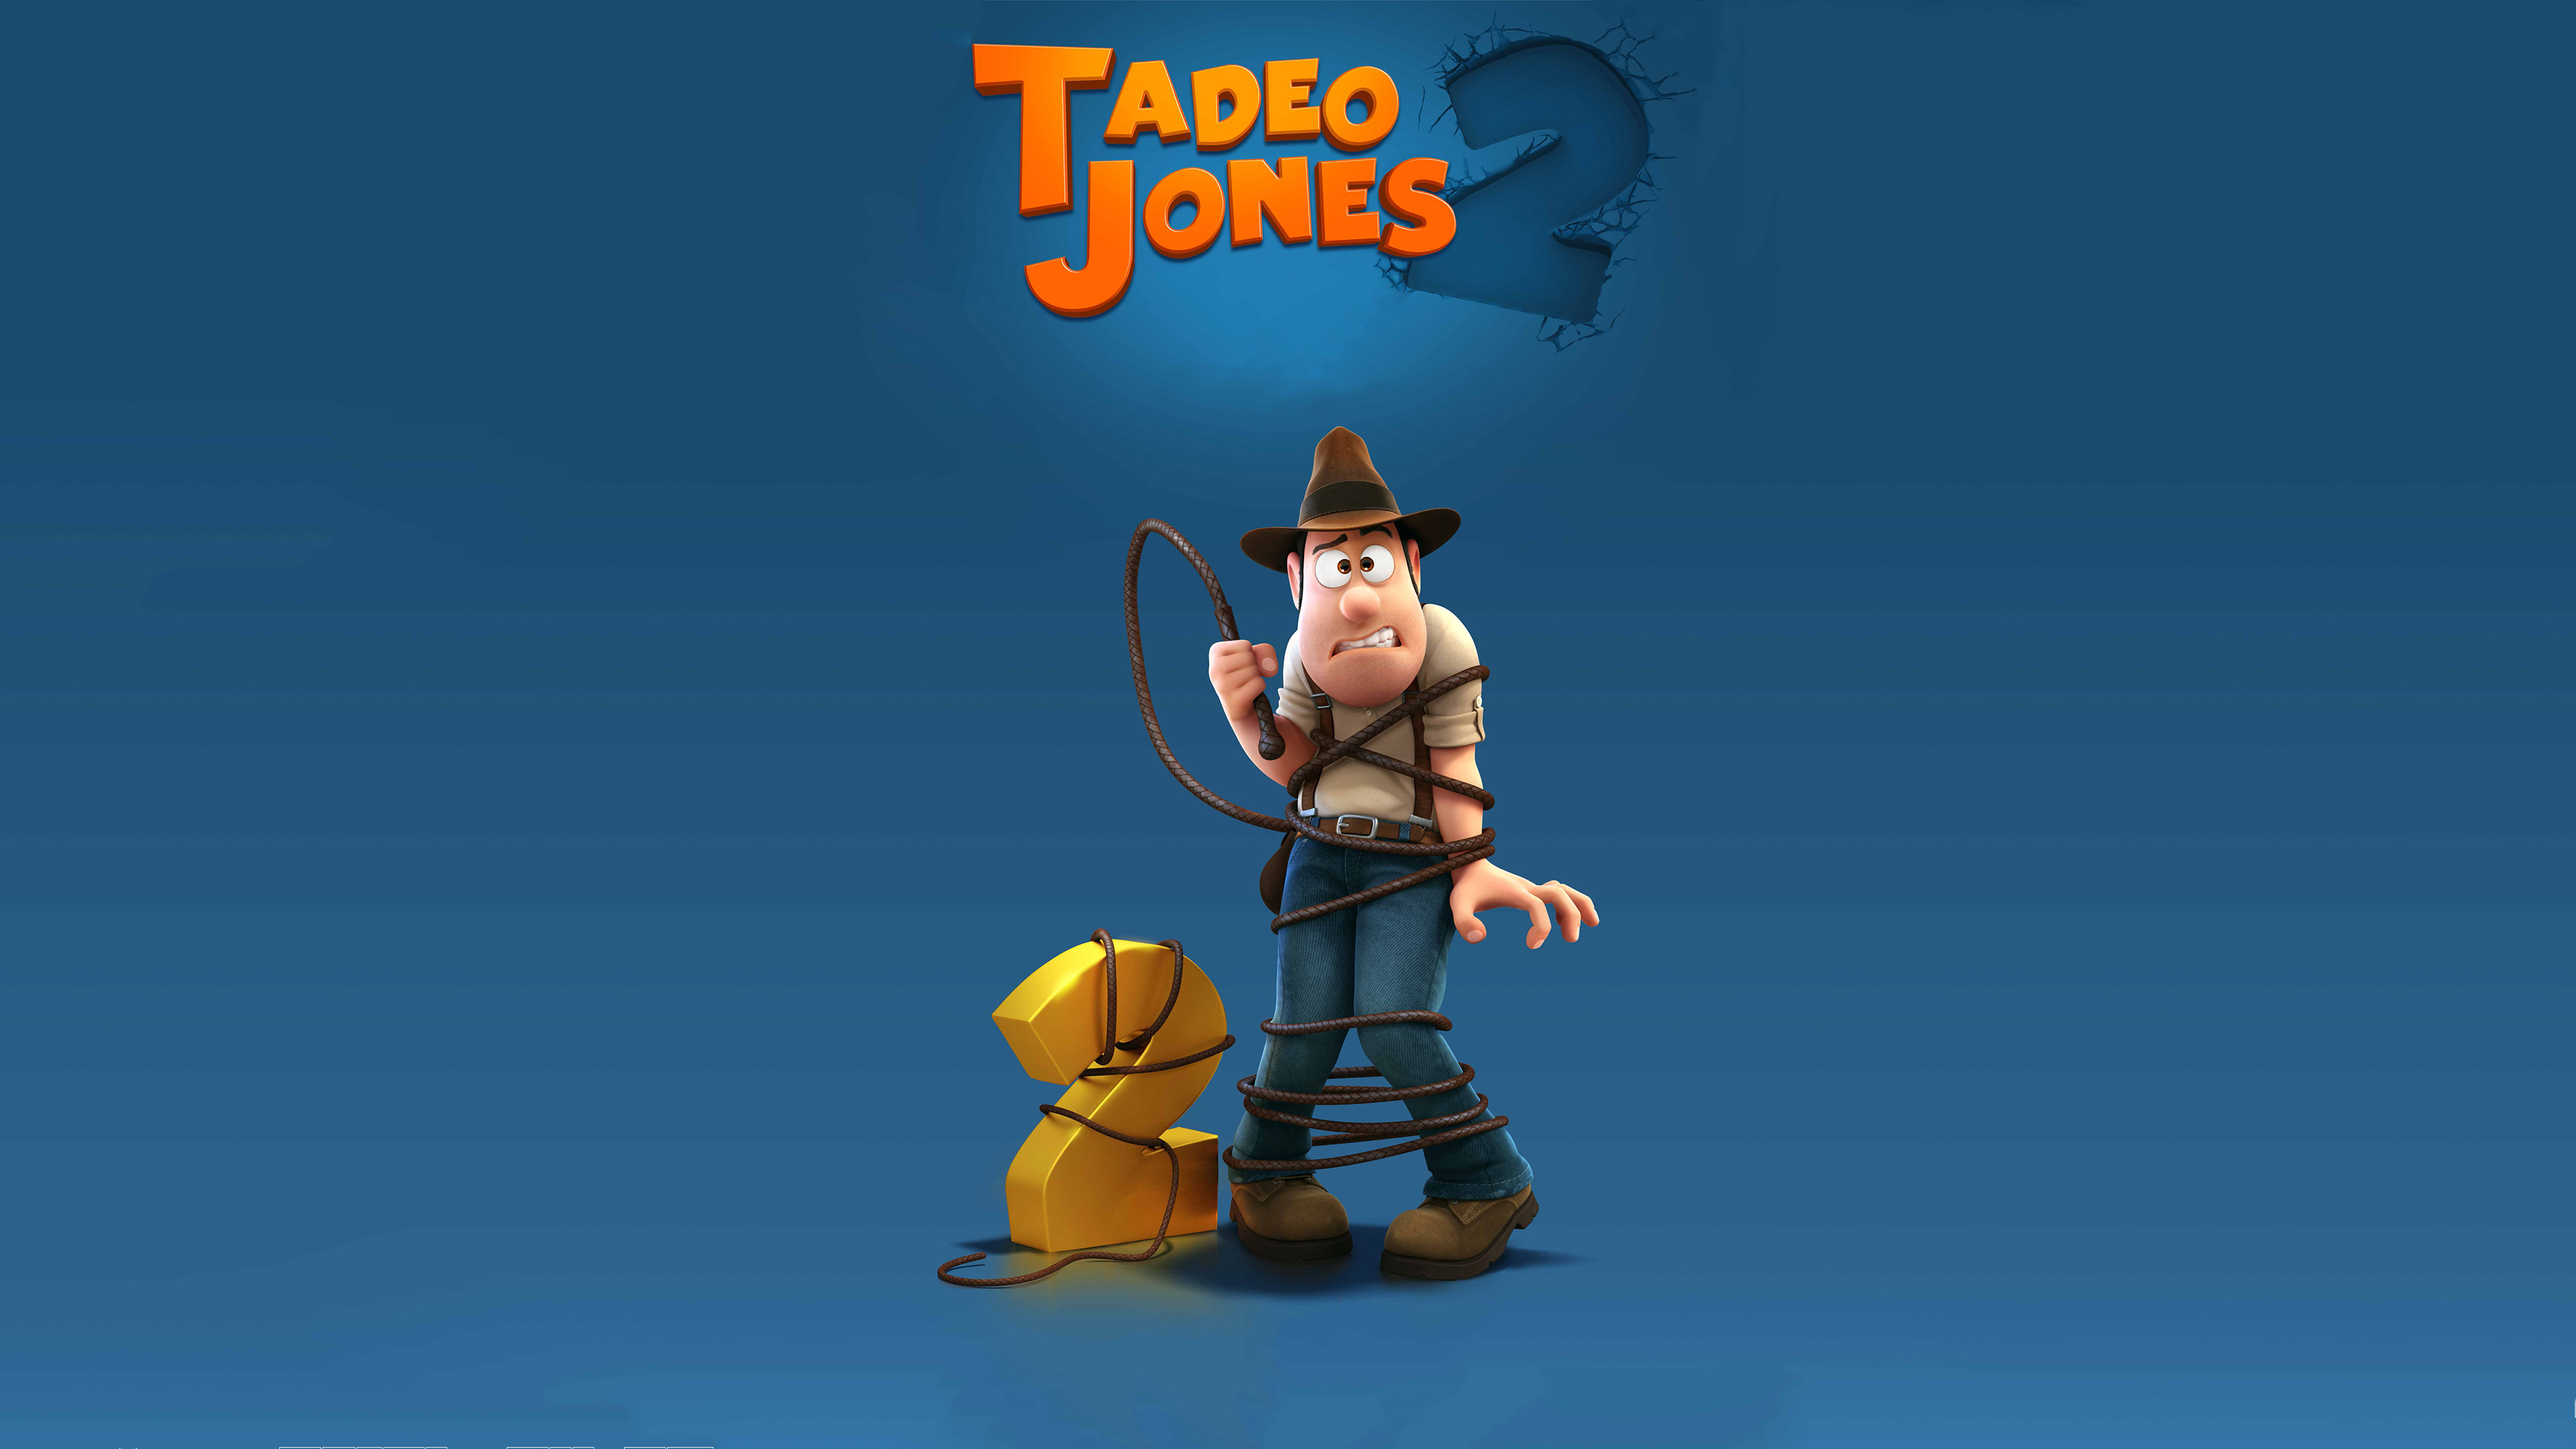 Wallpapers animated movies Tad Jones 2 games on the desktop